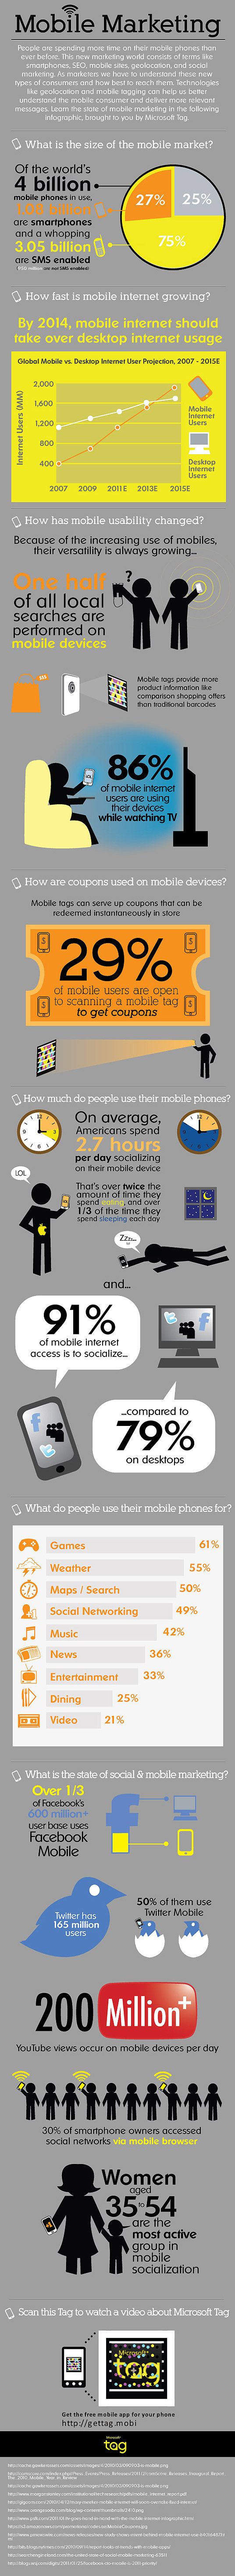 Mobile Marketing Statistics 2012